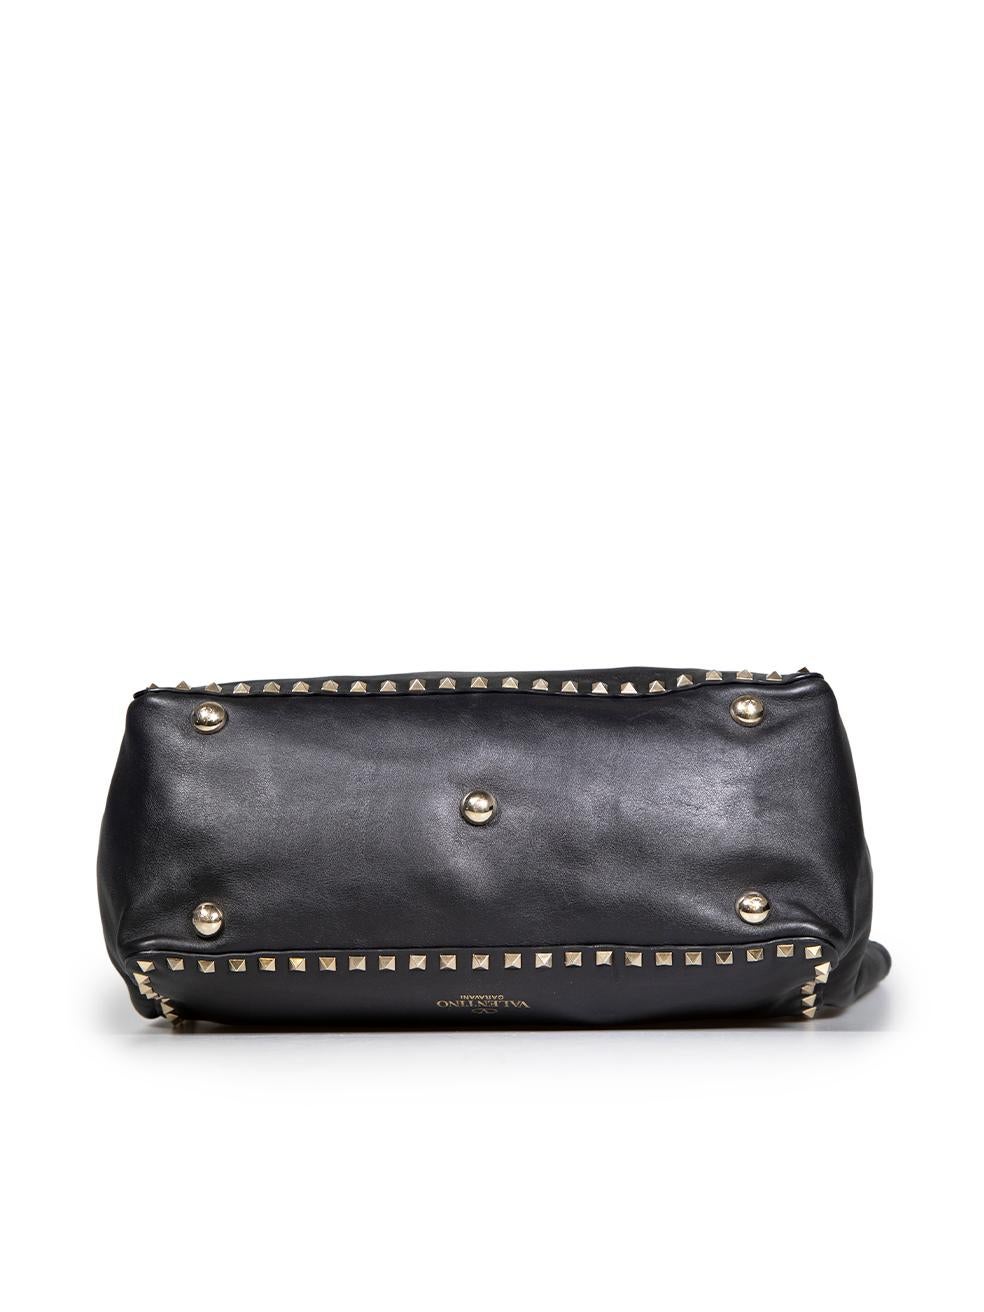 Valentino Black Leather Medium Rockstud Tote Bag For Sale 1